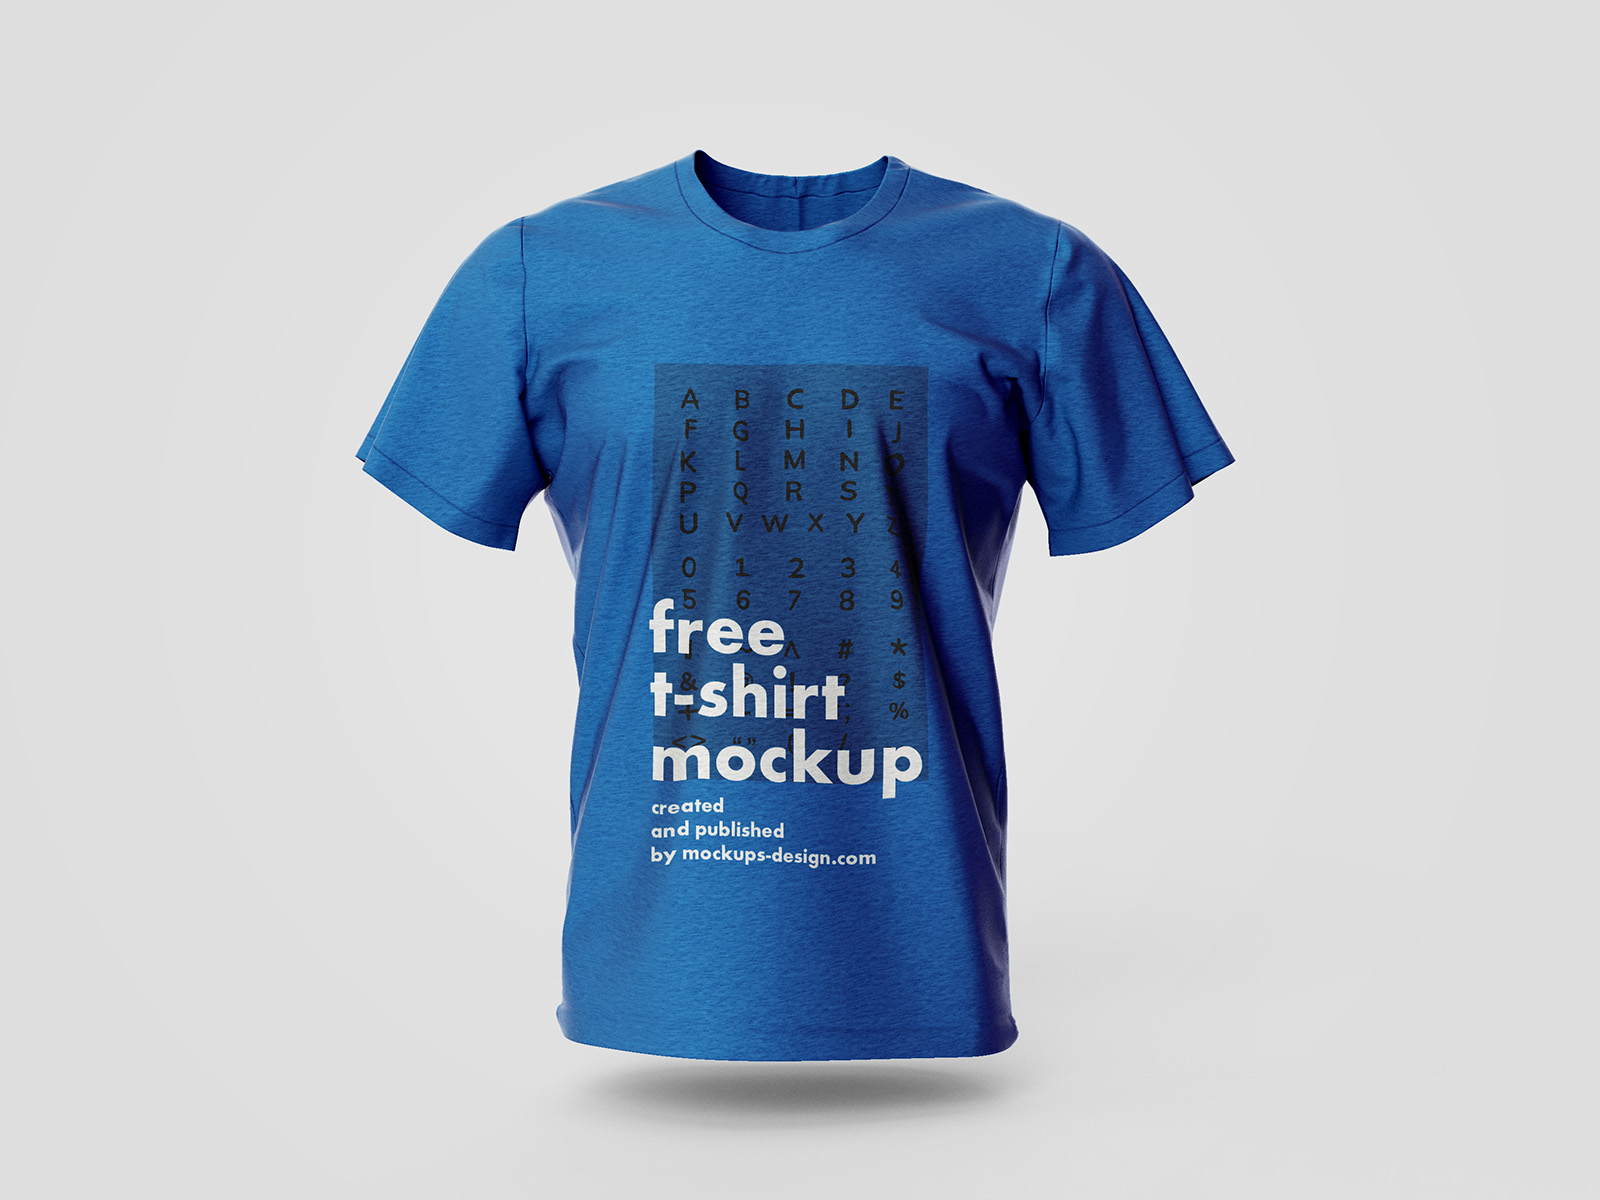 Free t-shirt mockup